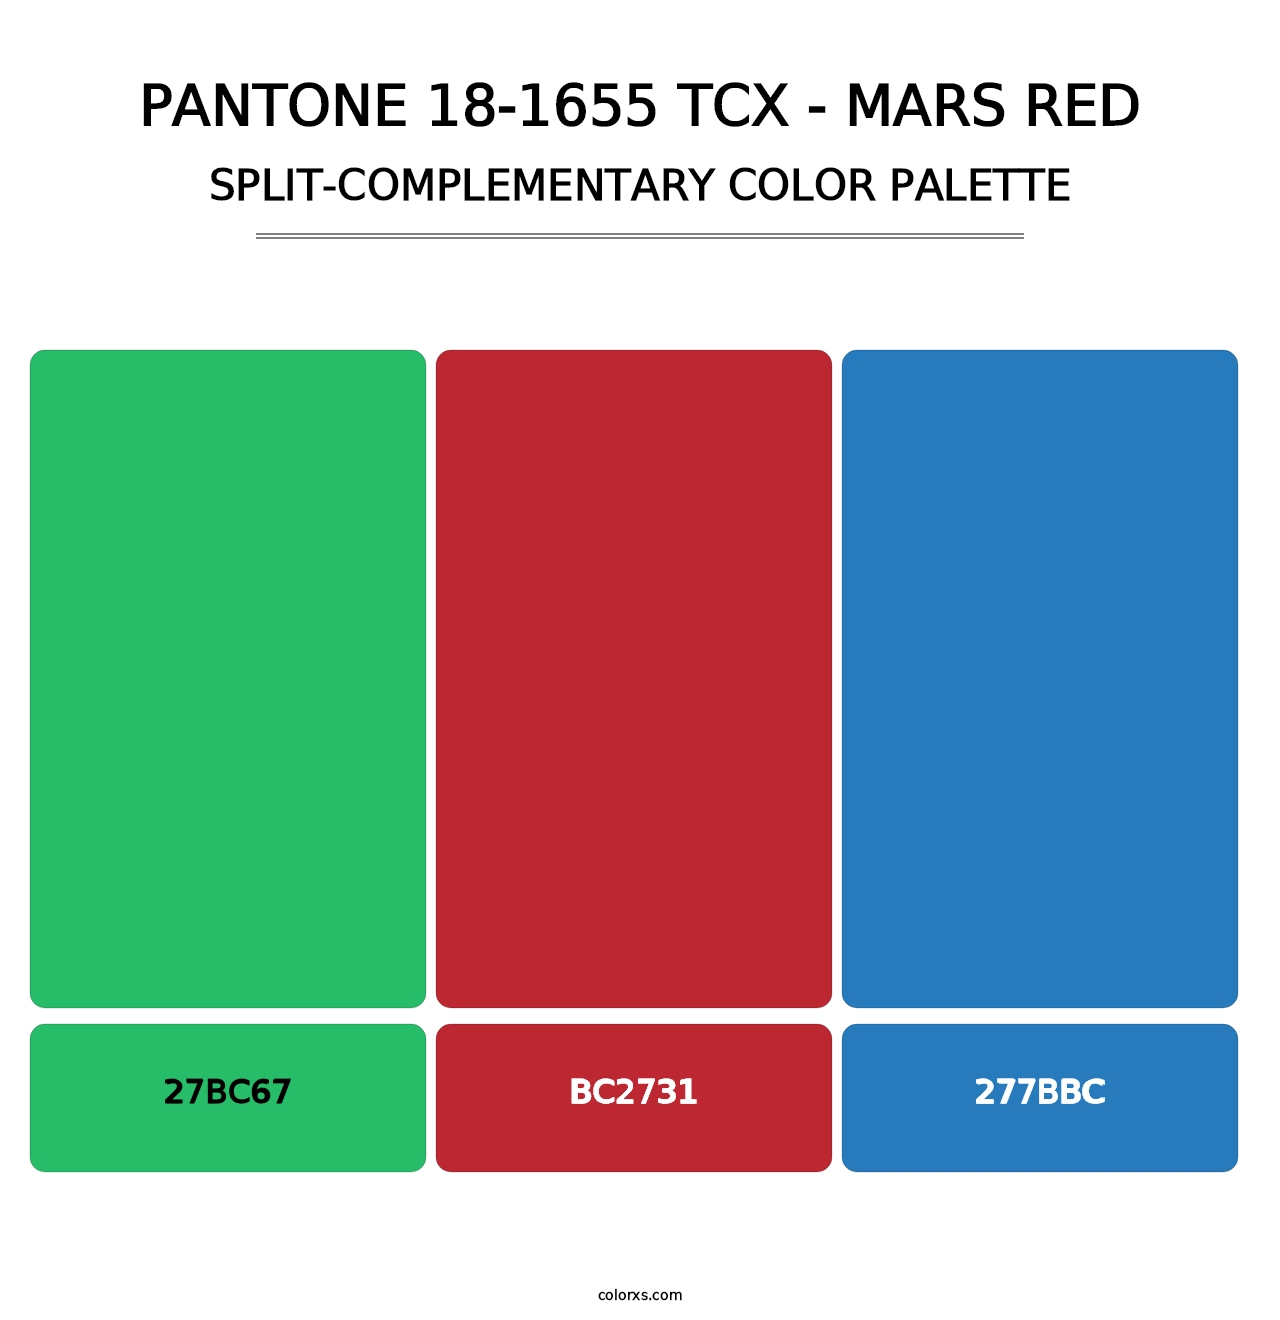 PANTONE 18-1655 TCX - Mars Red - Split-Complementary Color Palette